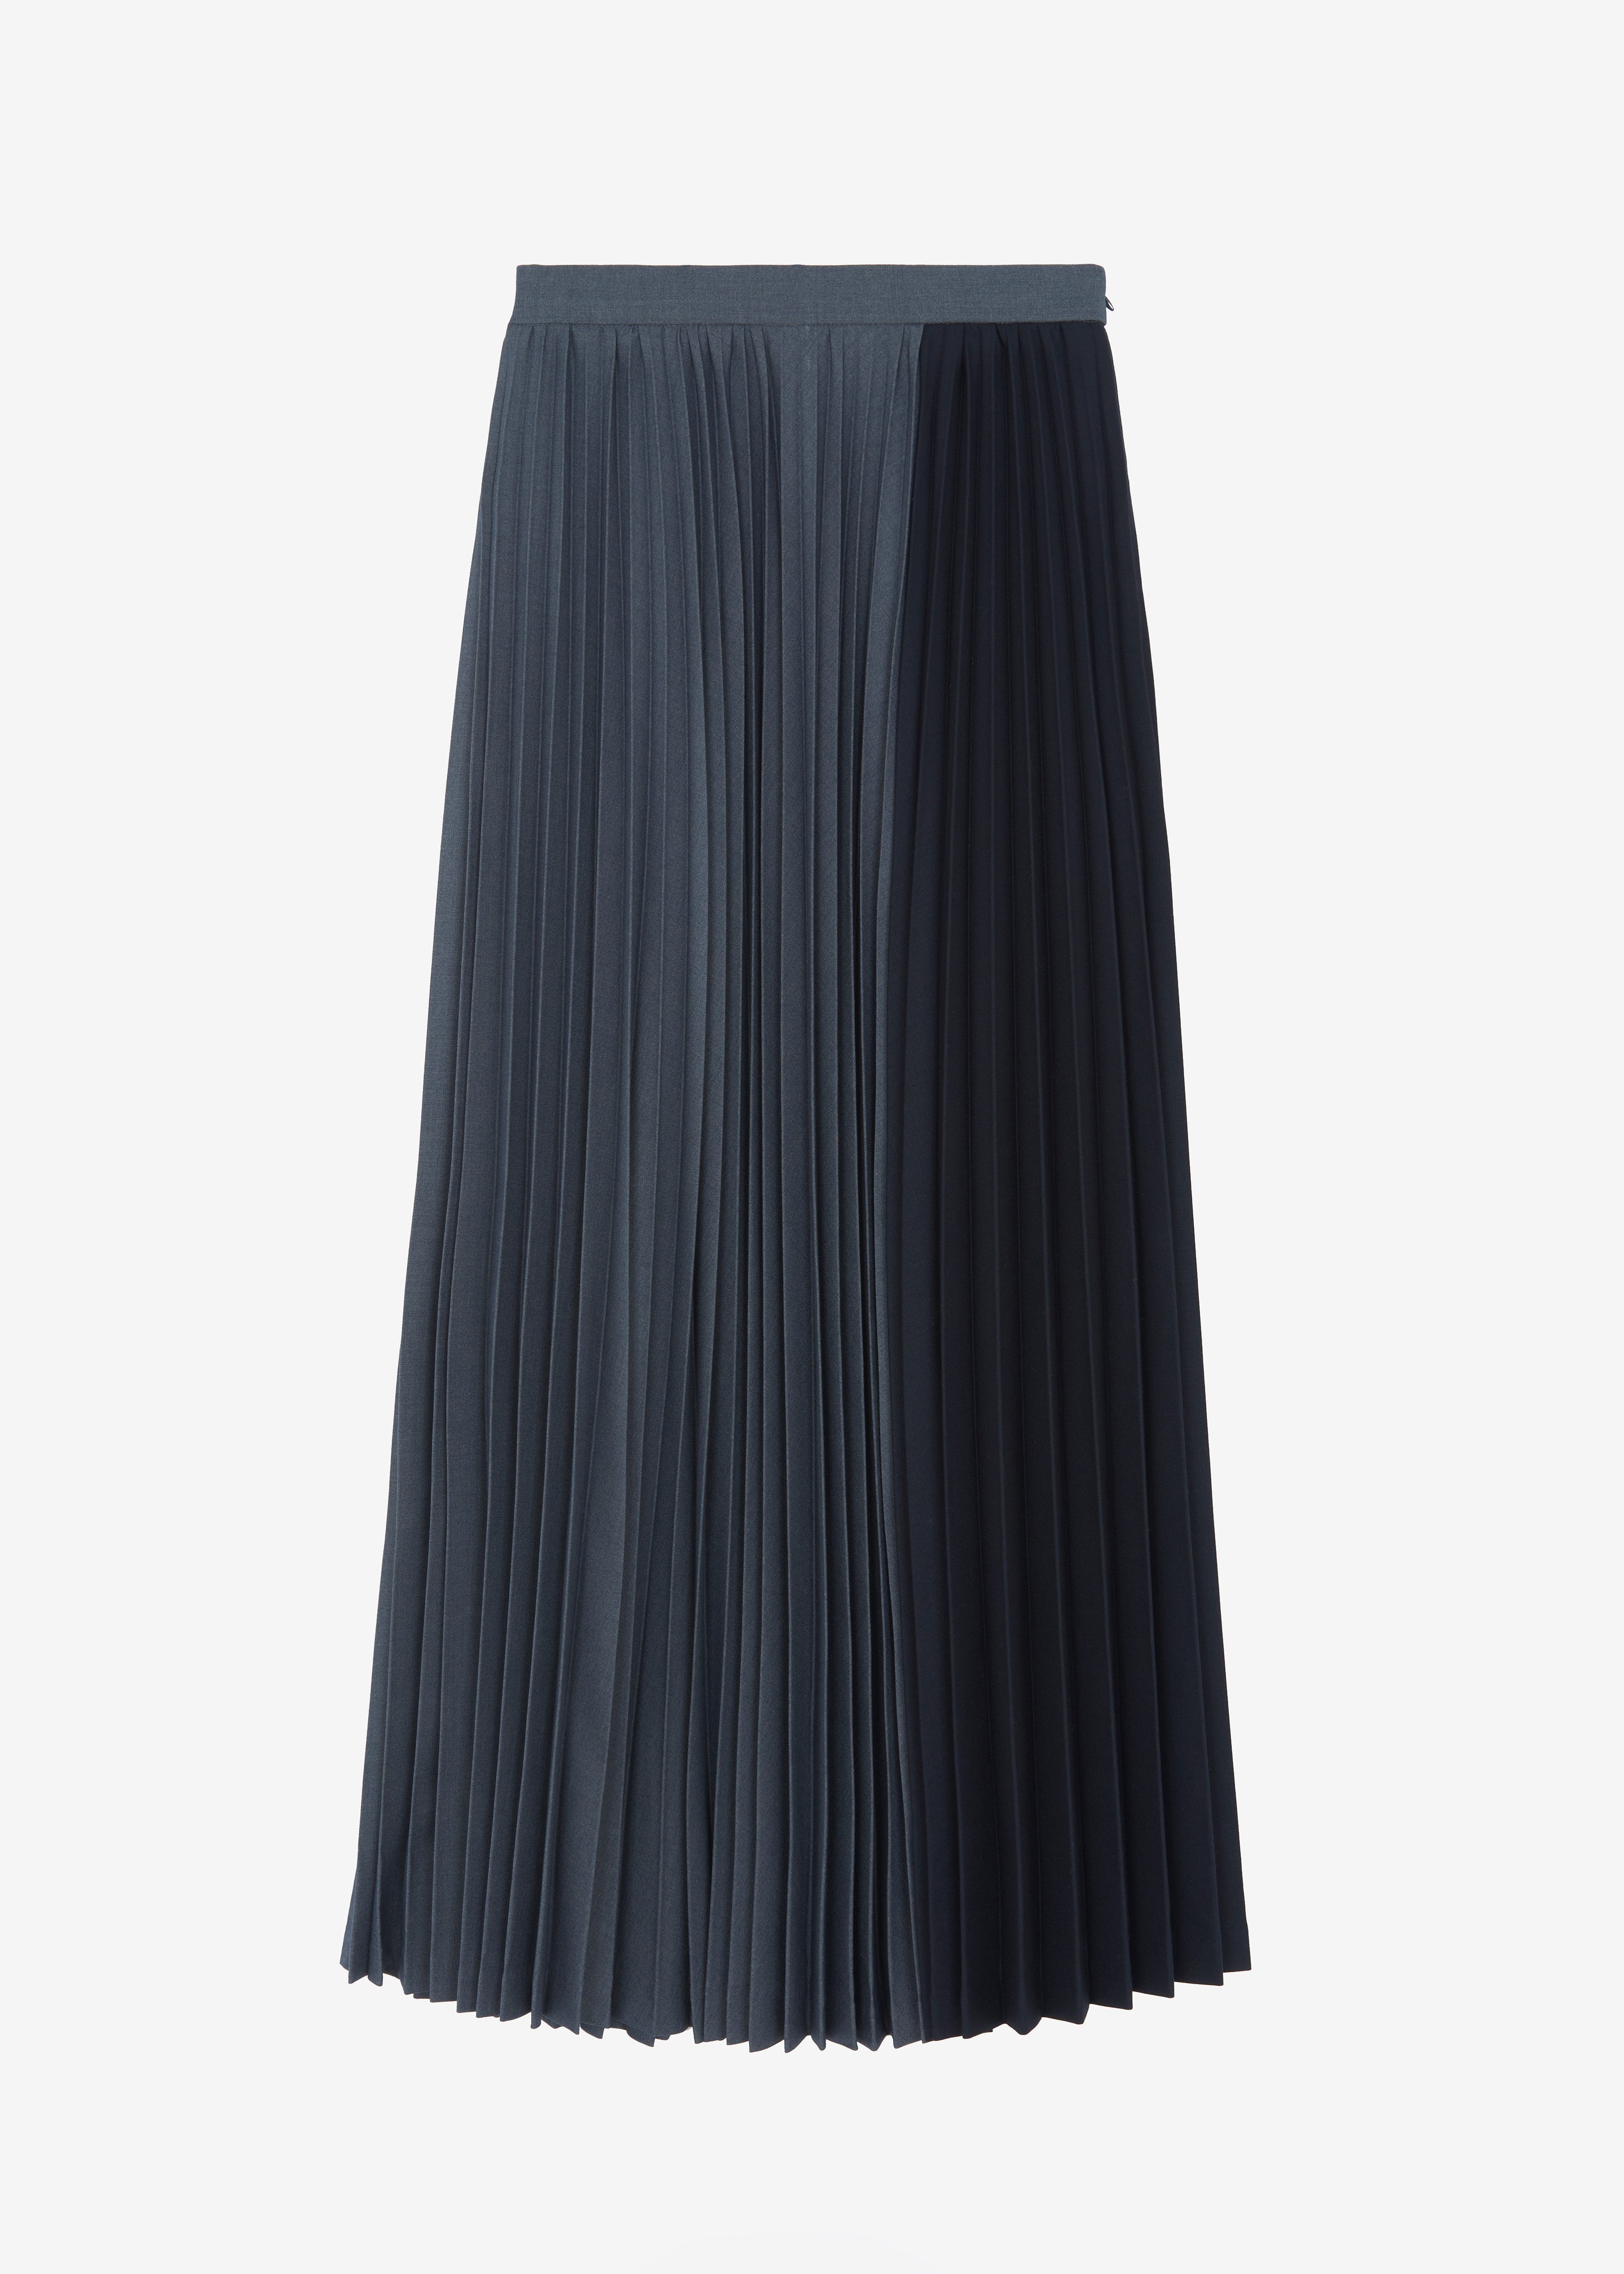 Orem Pleated Skirt - Charcoal - 7